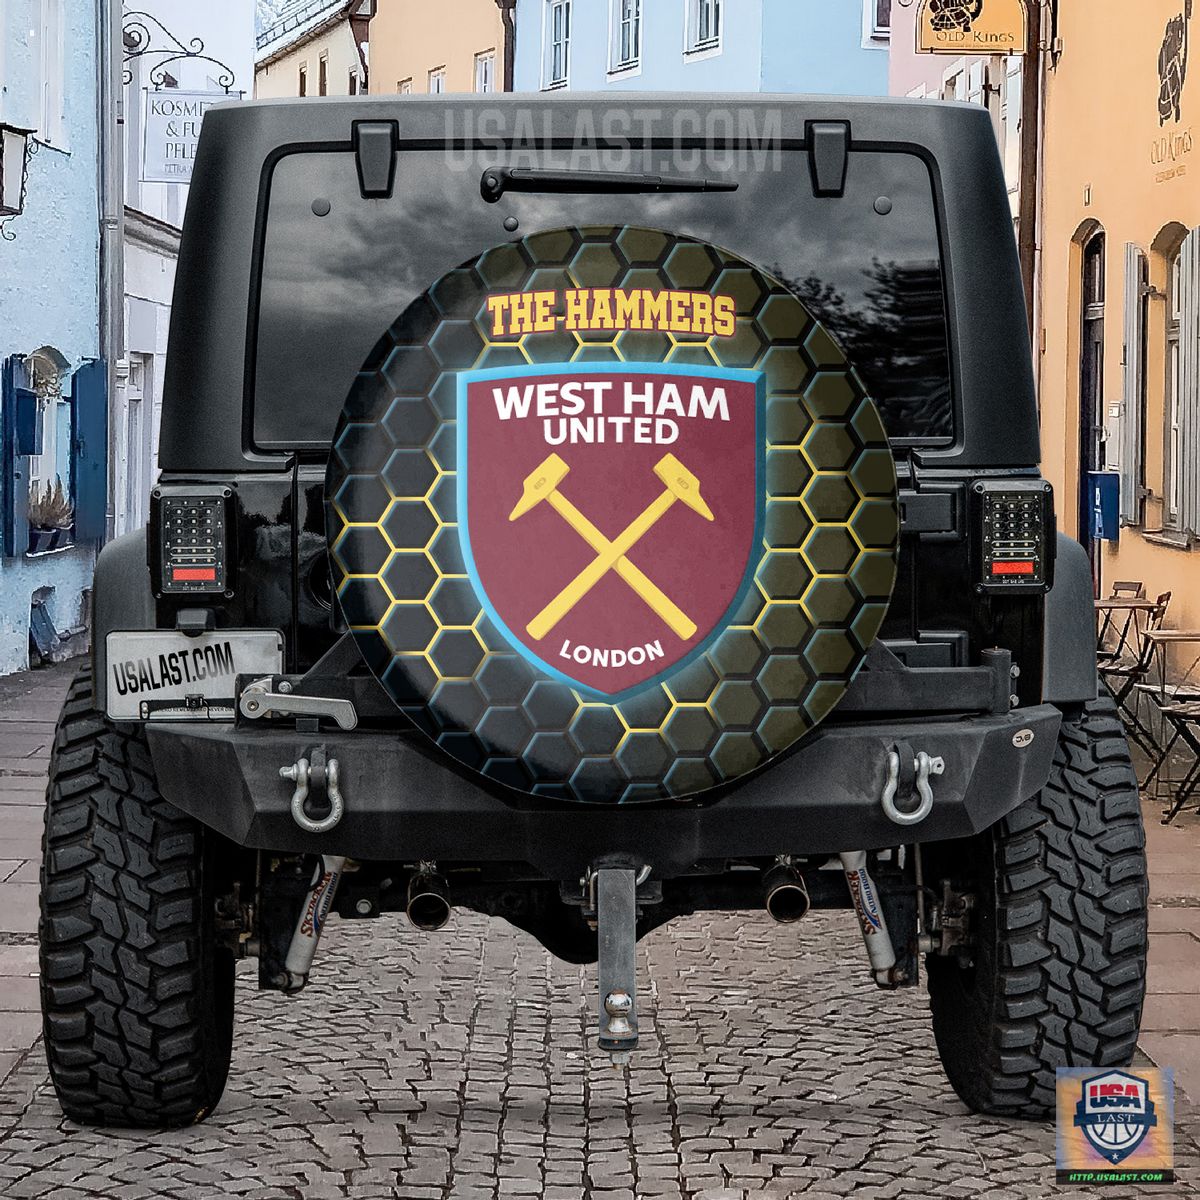 AMAZING West Ham United FC Spare Tire Cover